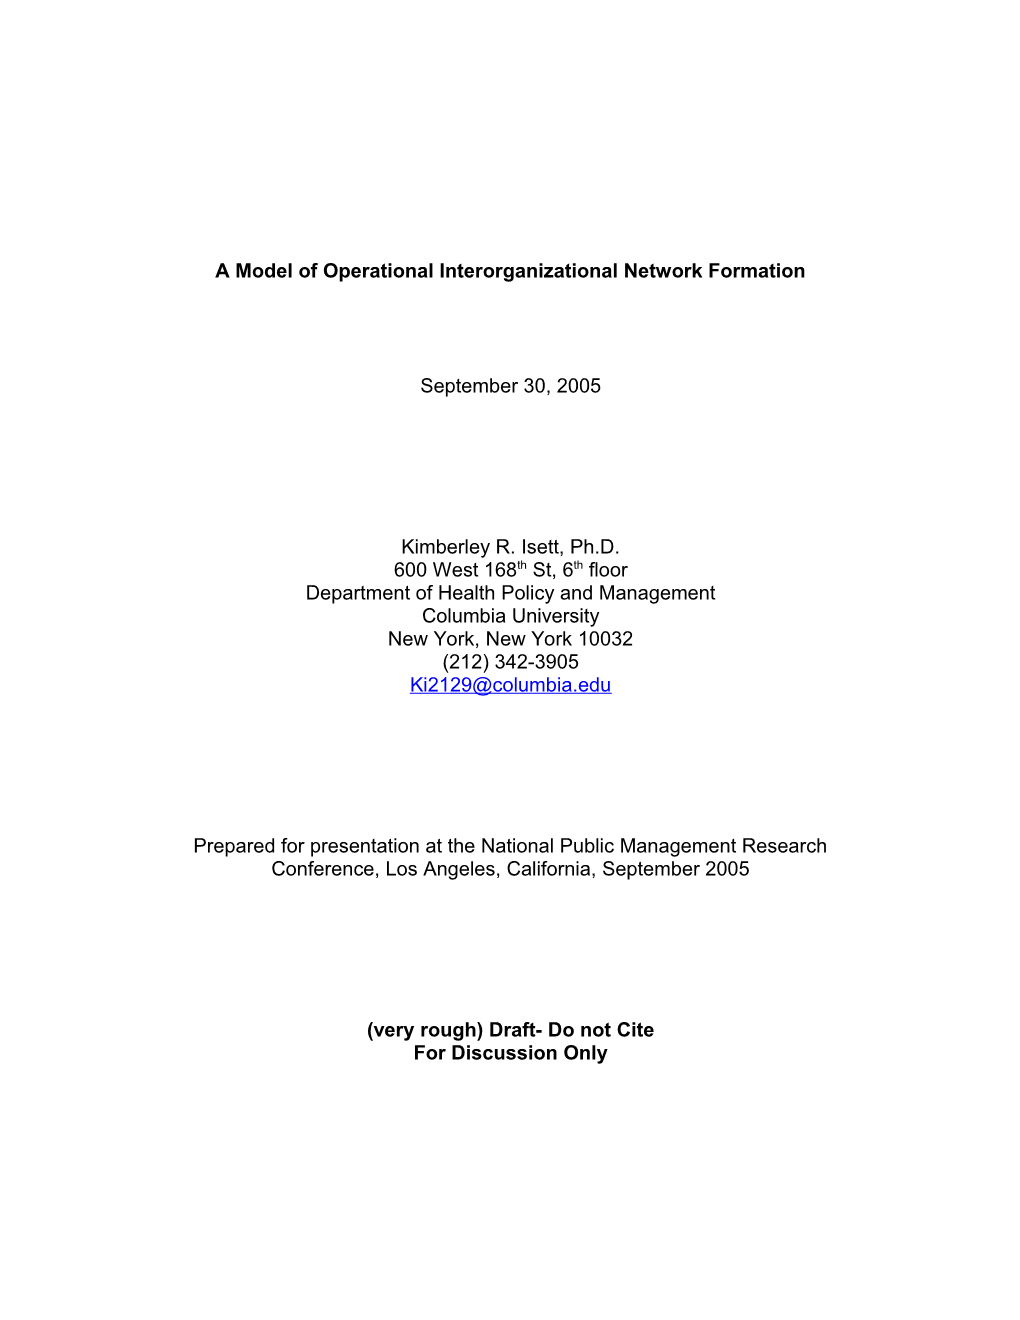 A Model Of Interorganizational Network Formation